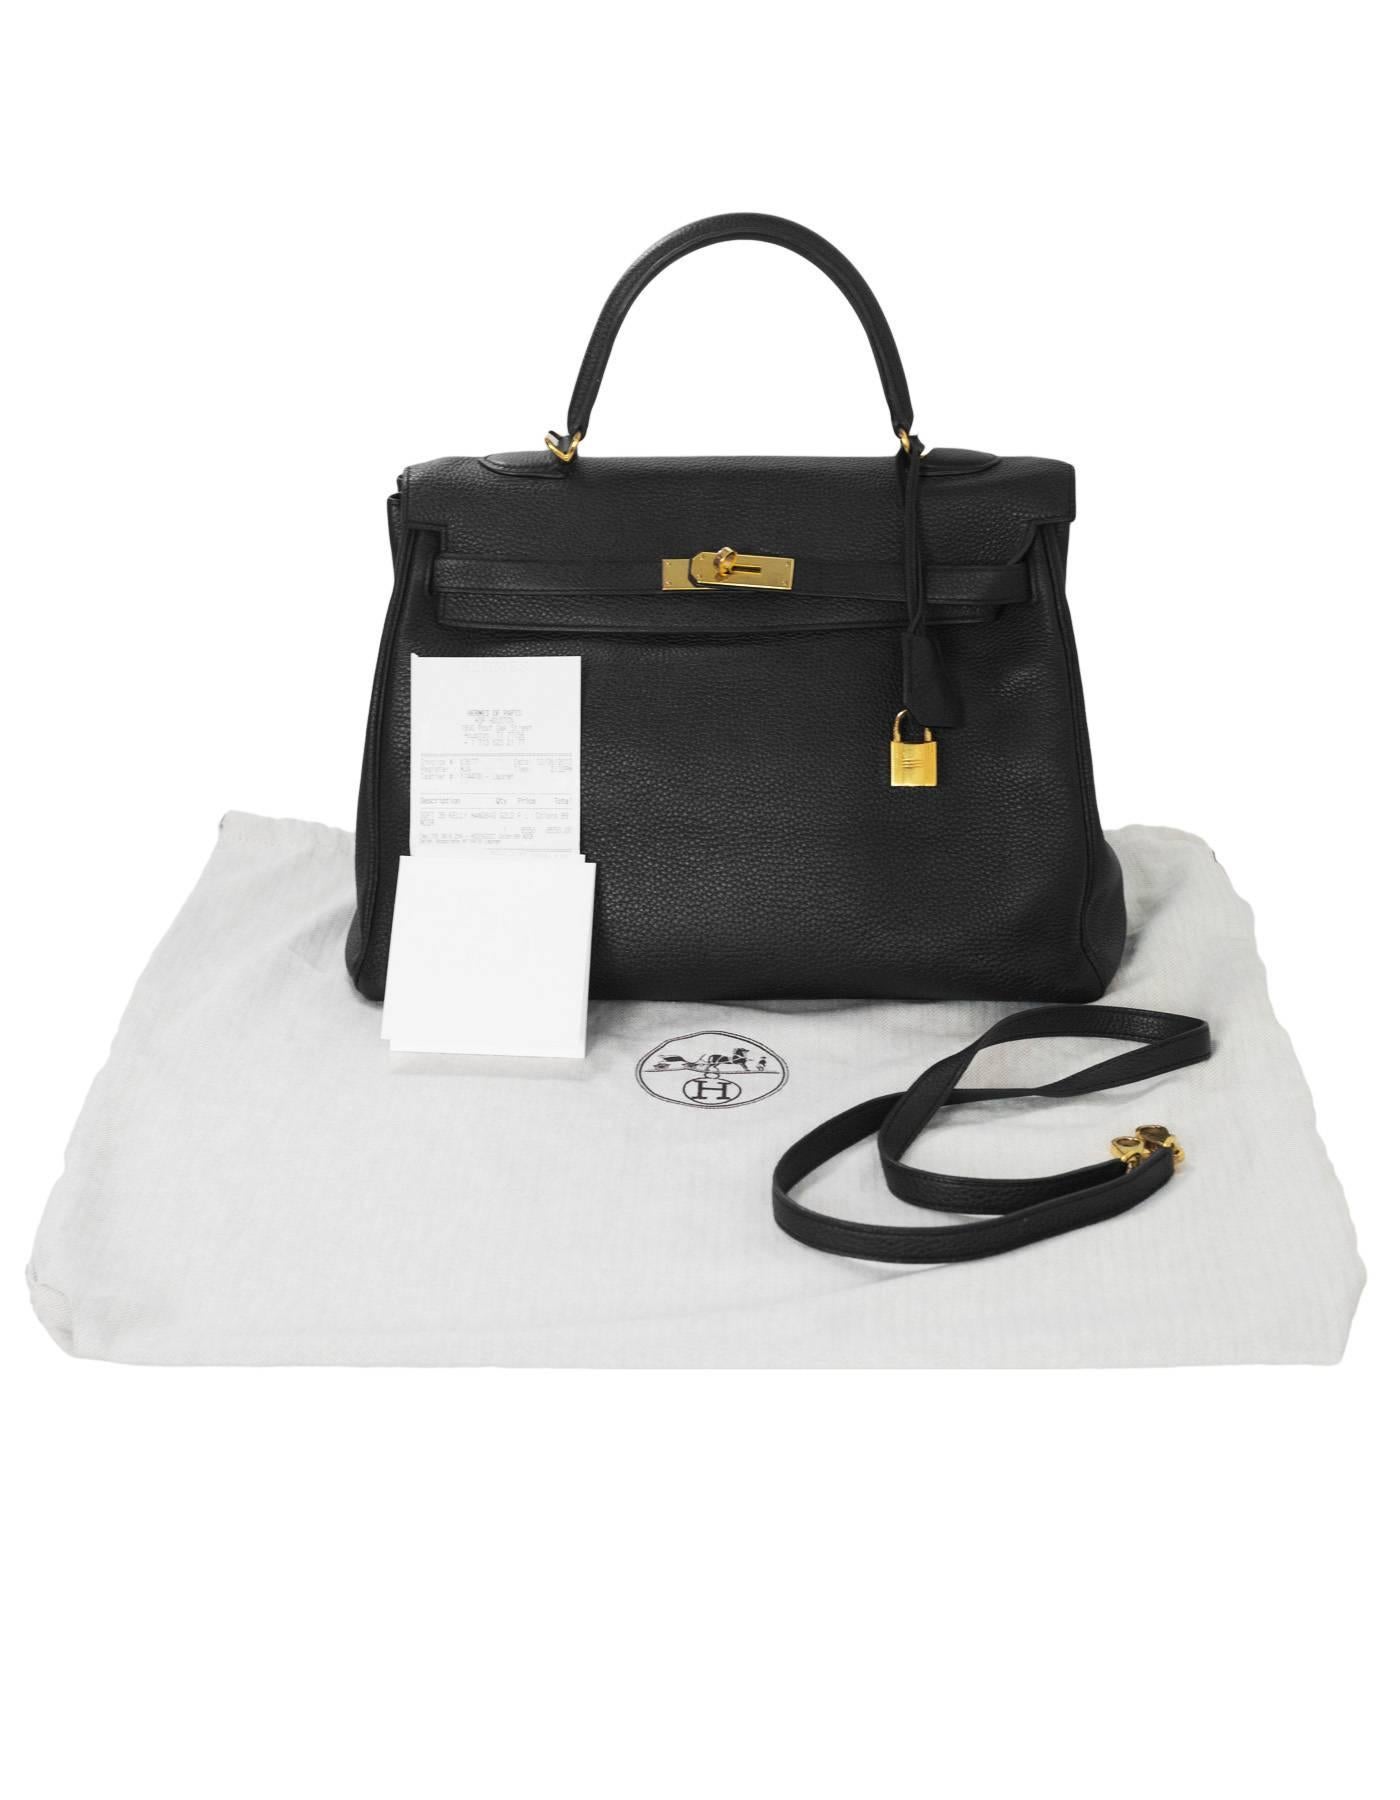 Hermes Black Togo Leather 35cm Retourne Kelly Bag GHW w/ Receipt 5